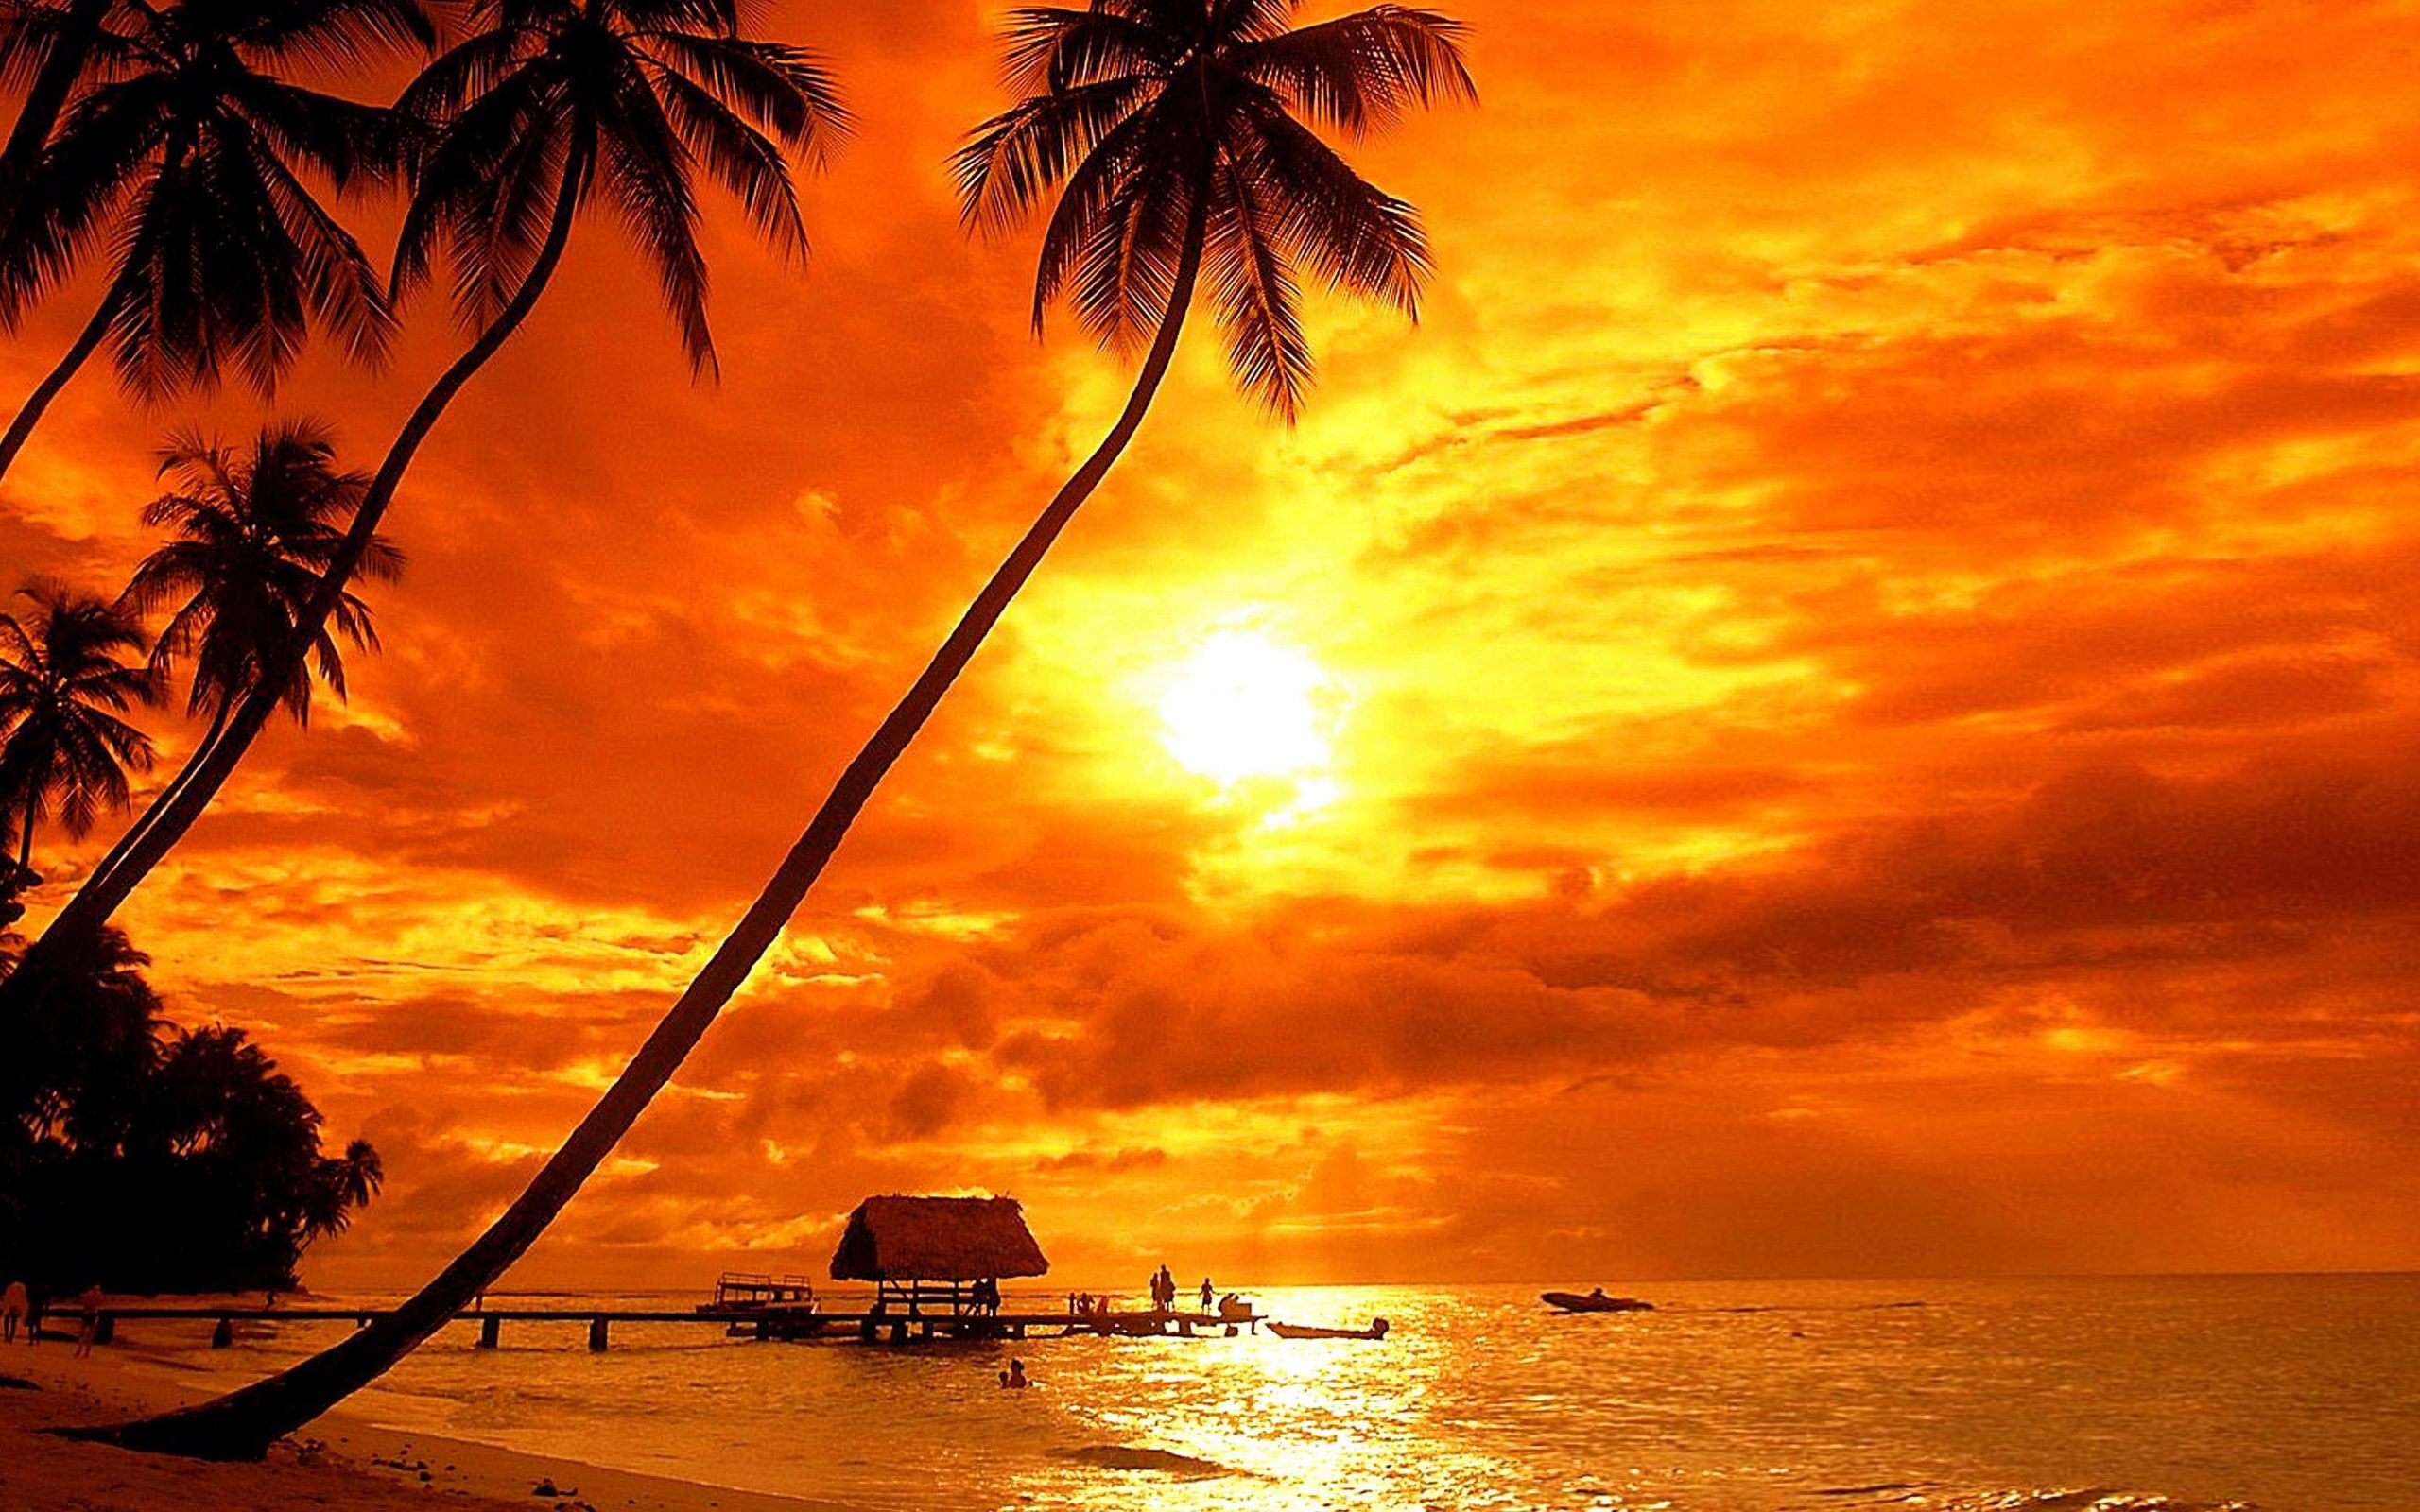 Bora Bora Tropical Sunset Beach Palm Trees Red Sky Clouds Ultra Hd 4k Wallpaper For Desktop Laptop Tablet Mobile Phones And Tv 3840х2400